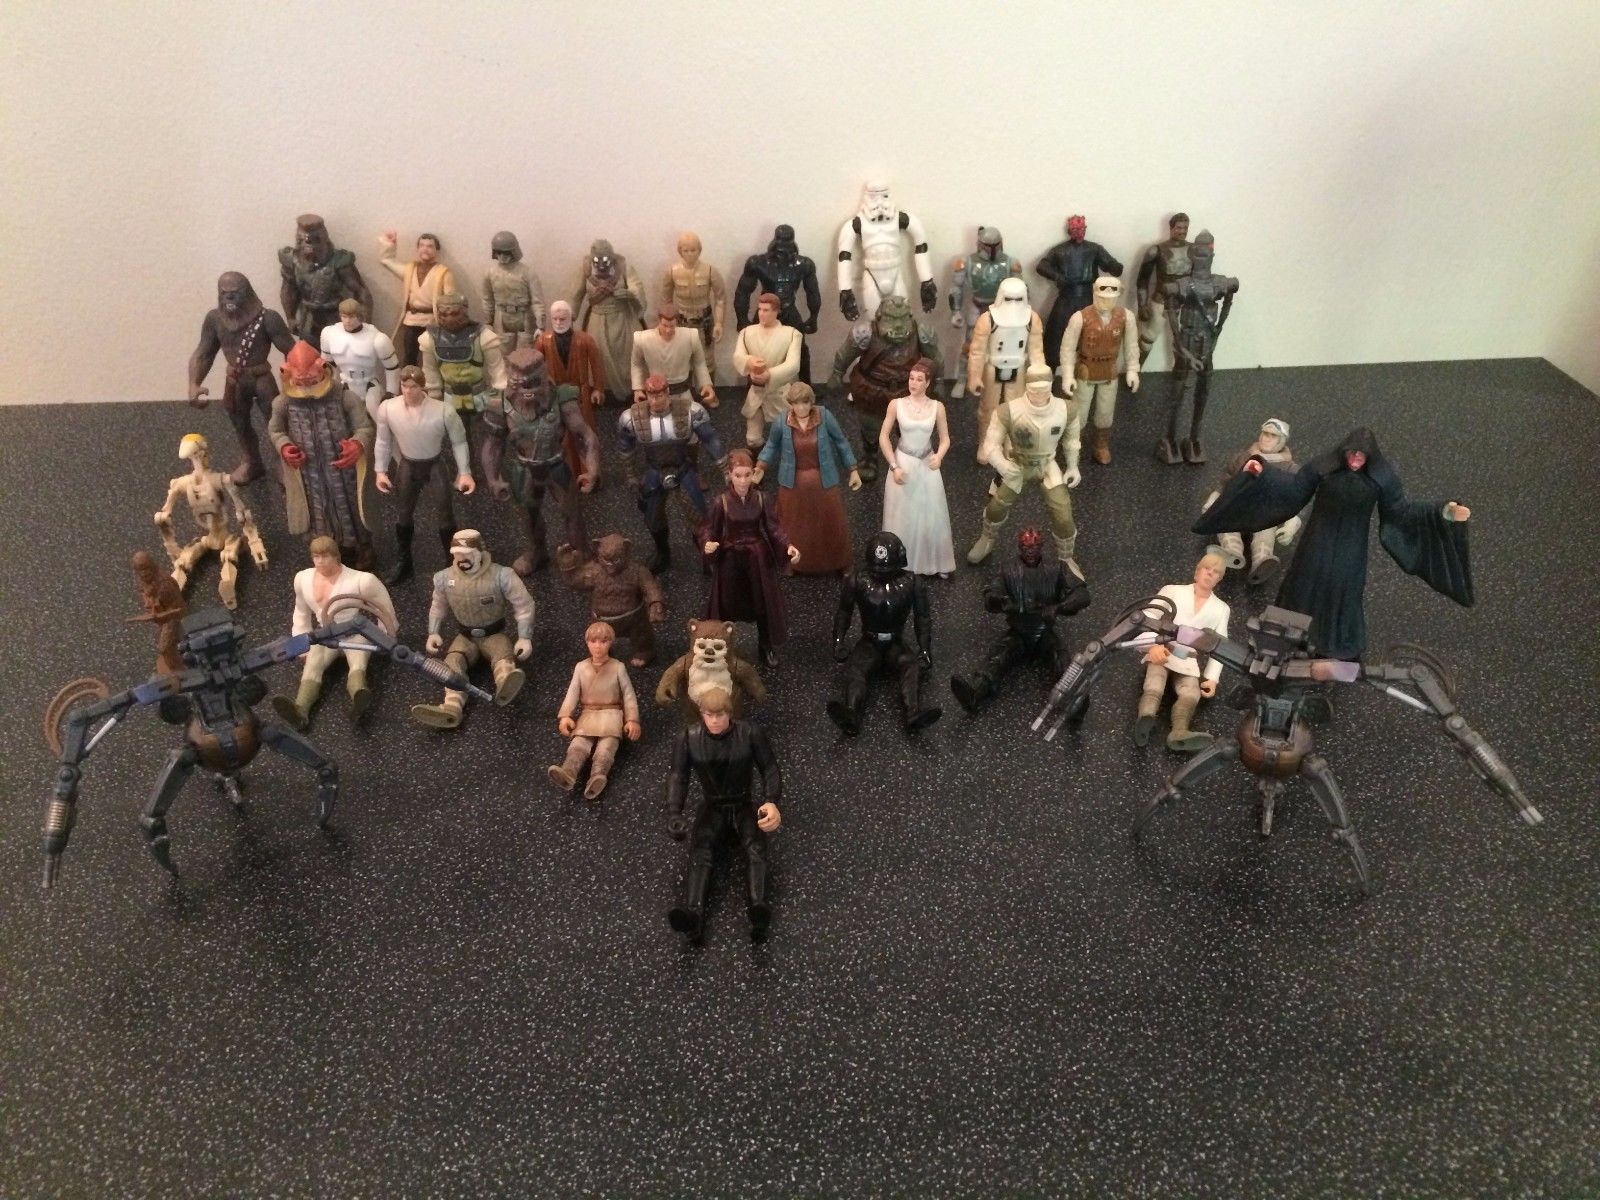 43 Star Wars Figures Job Lot/Bundle Darth Vader Admiral Ackbar Darth Maul